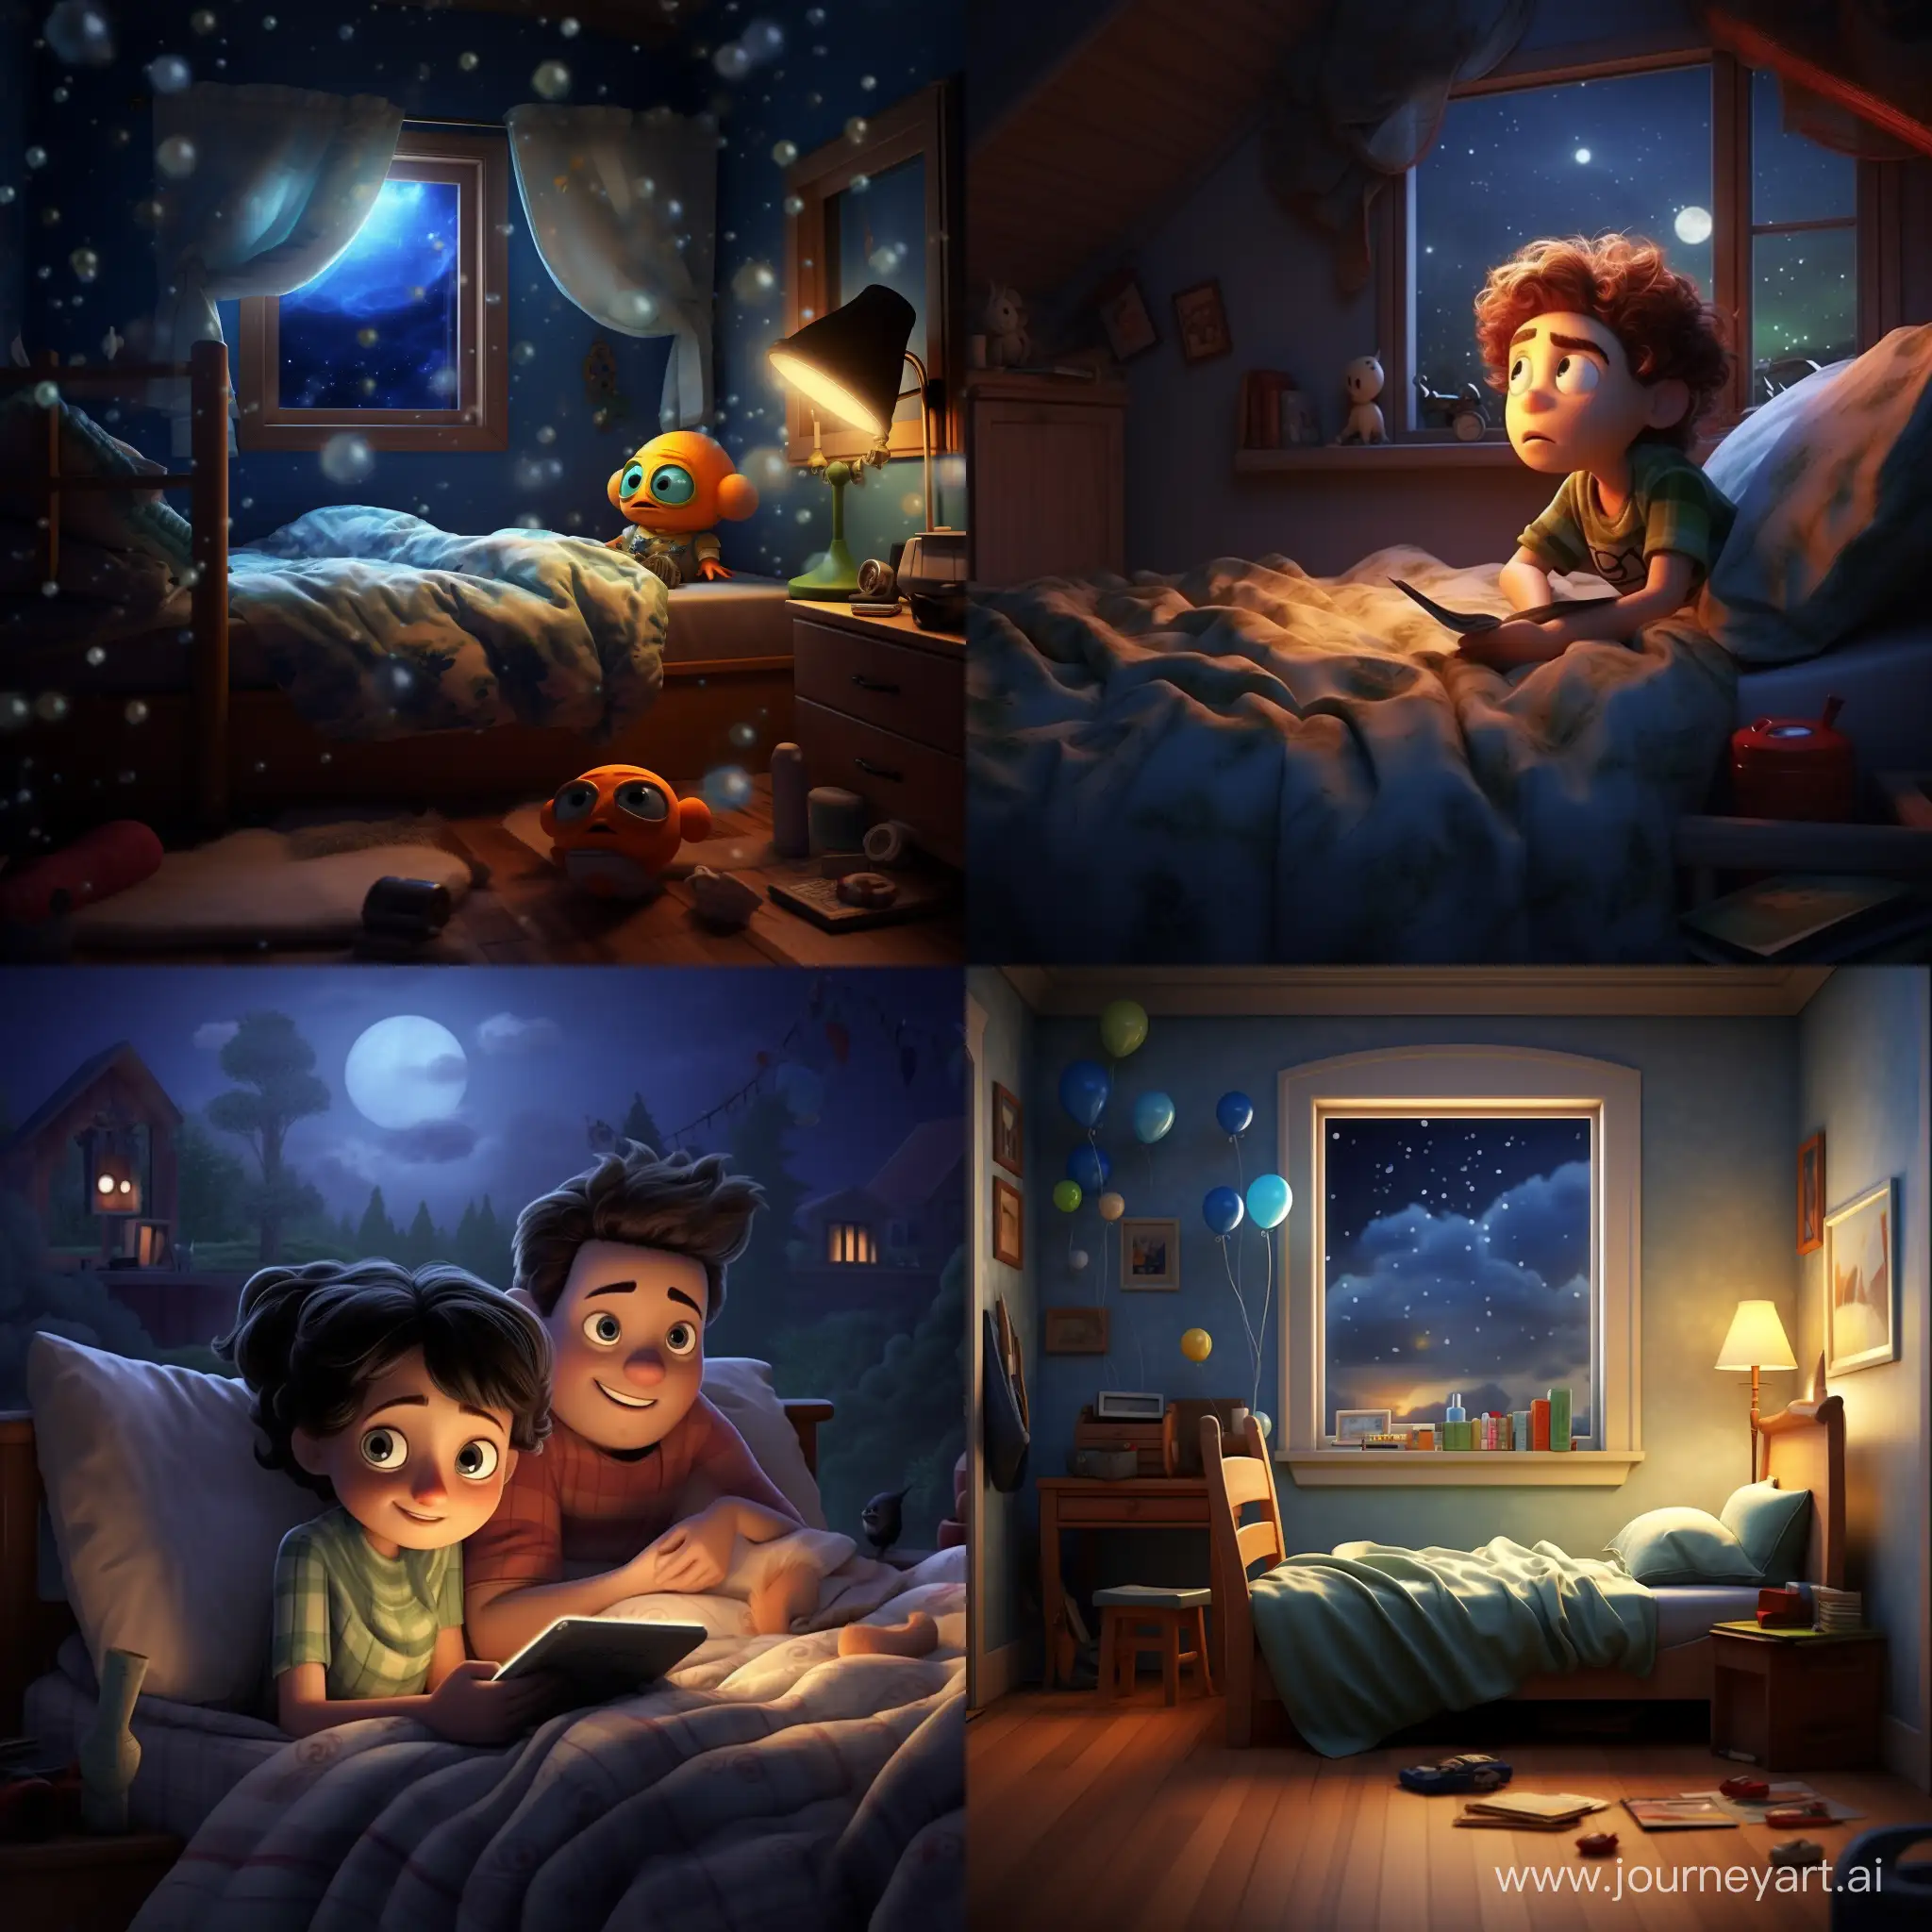 Good night, in Pixar style